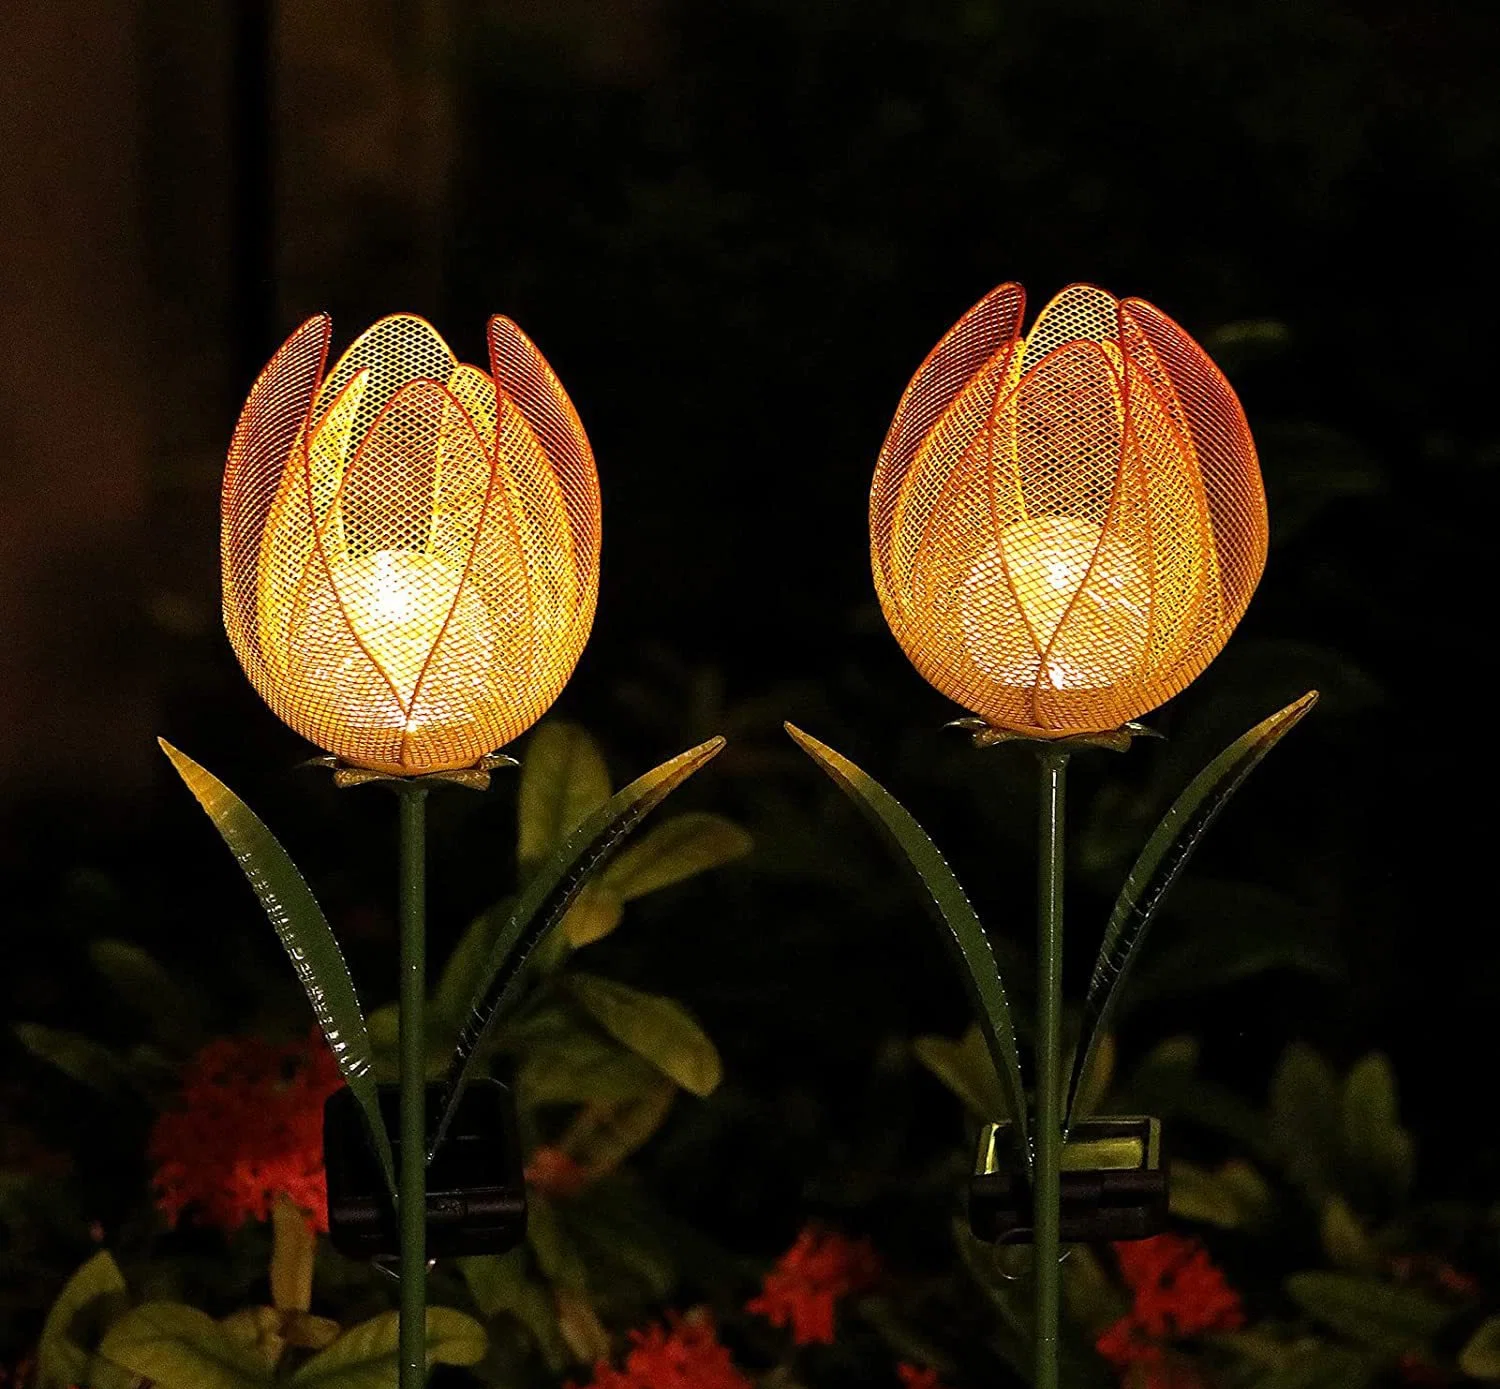 Waterproof Metal Tulip Globe Glass Ball Solar Lights Garden Stake Decoration for Patio Lawn Walkway Tabletop Ground